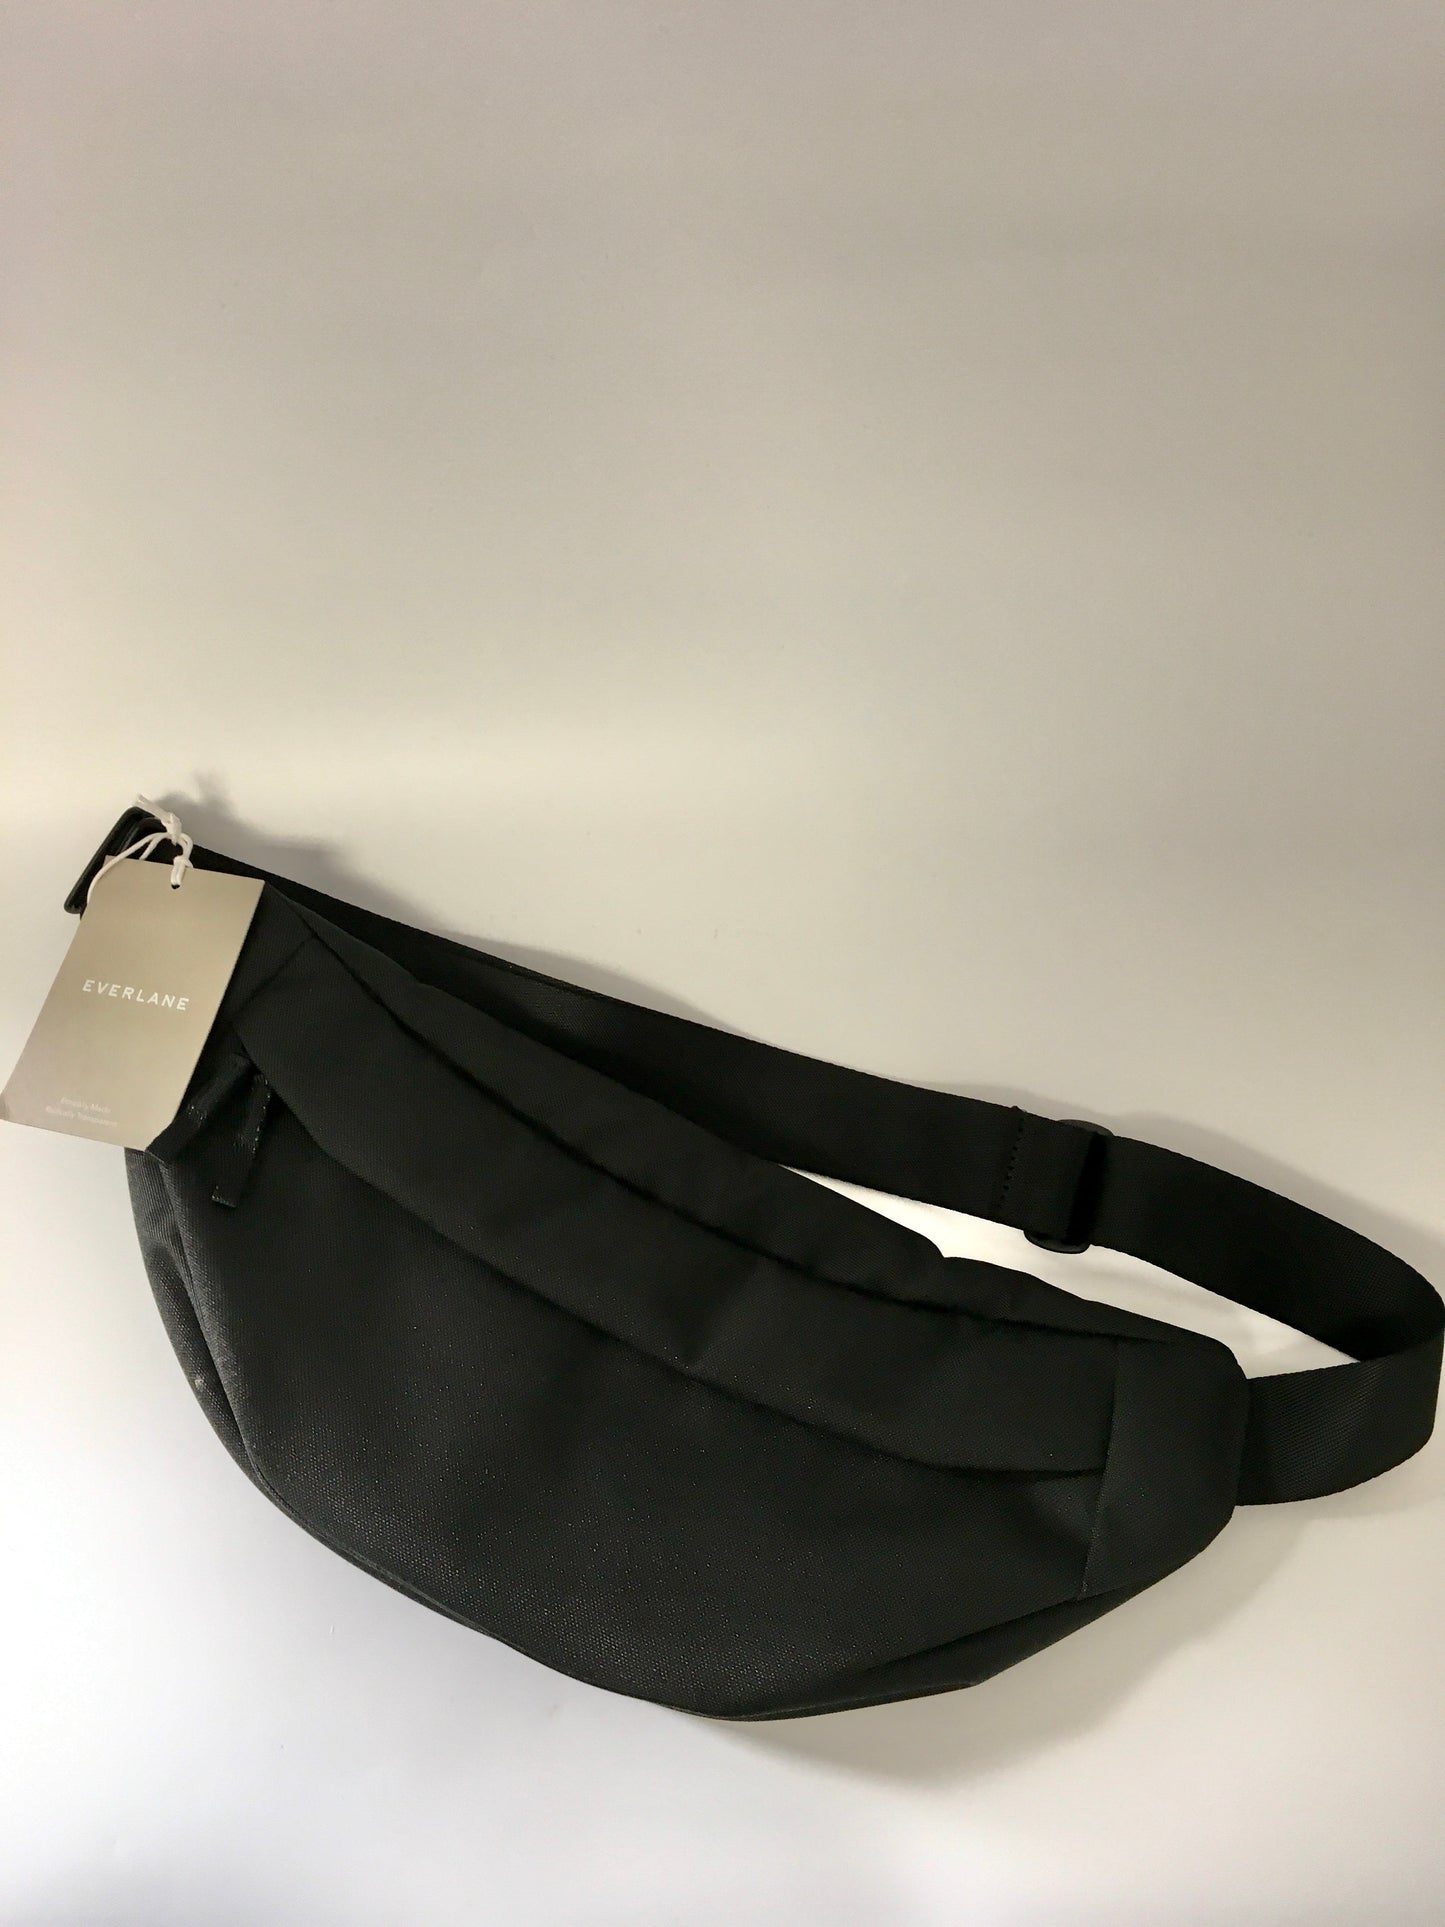 Handbag By Everlane  Size: Medium